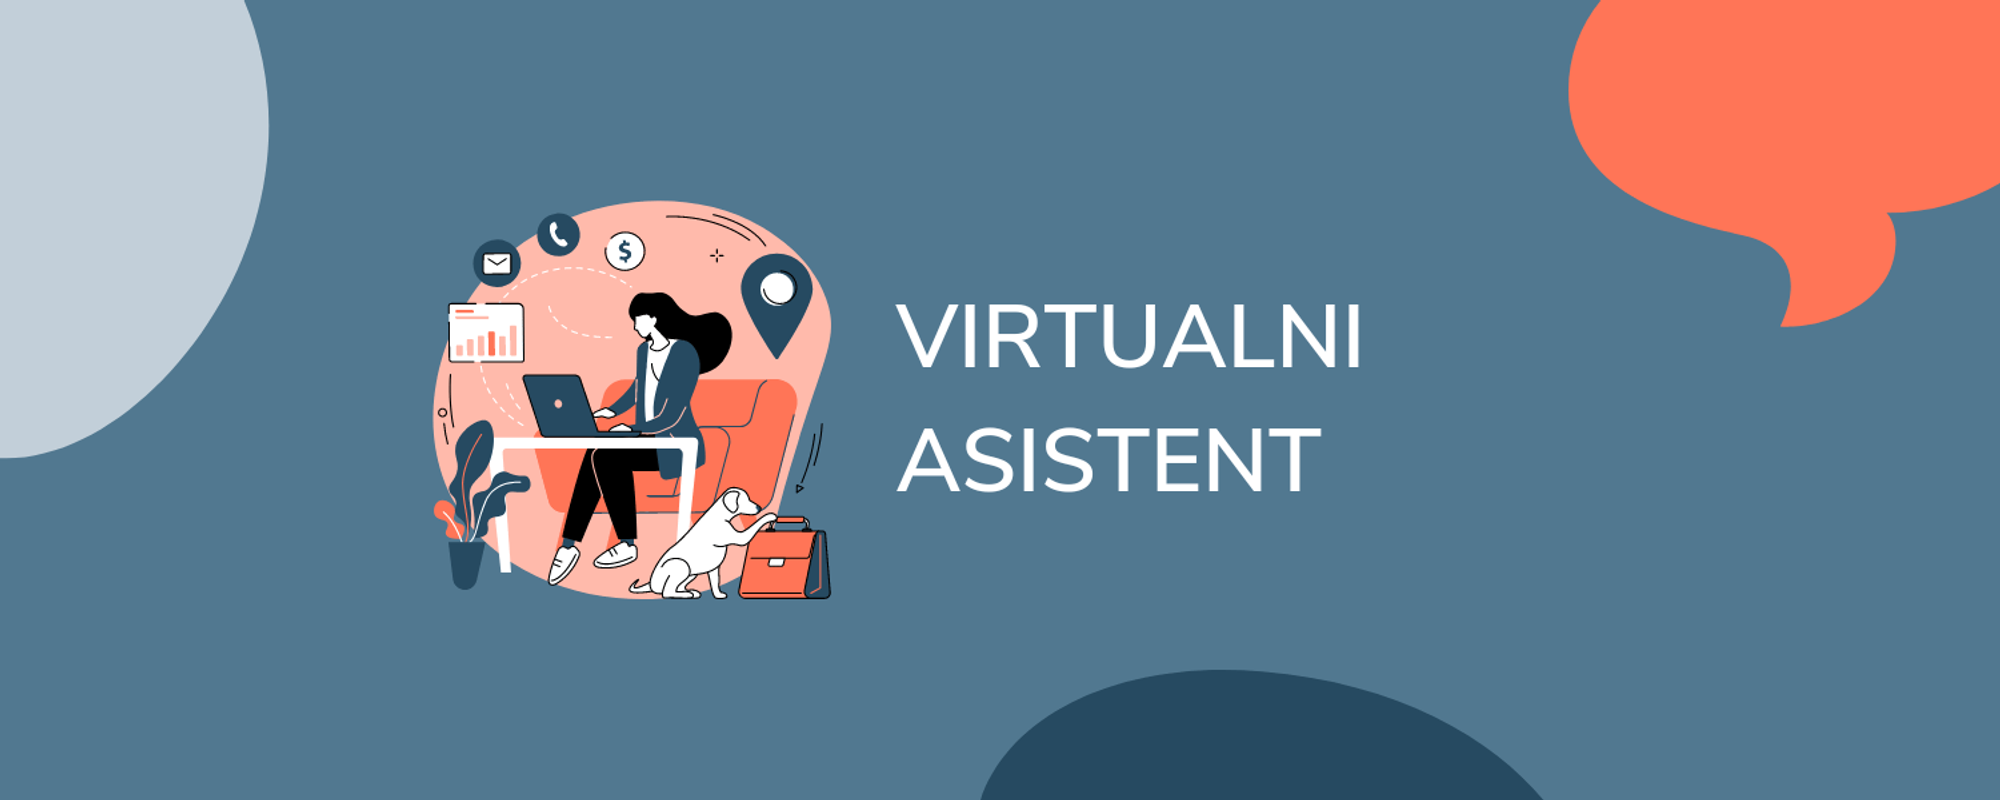 Što točno rade virtualni asistenti?